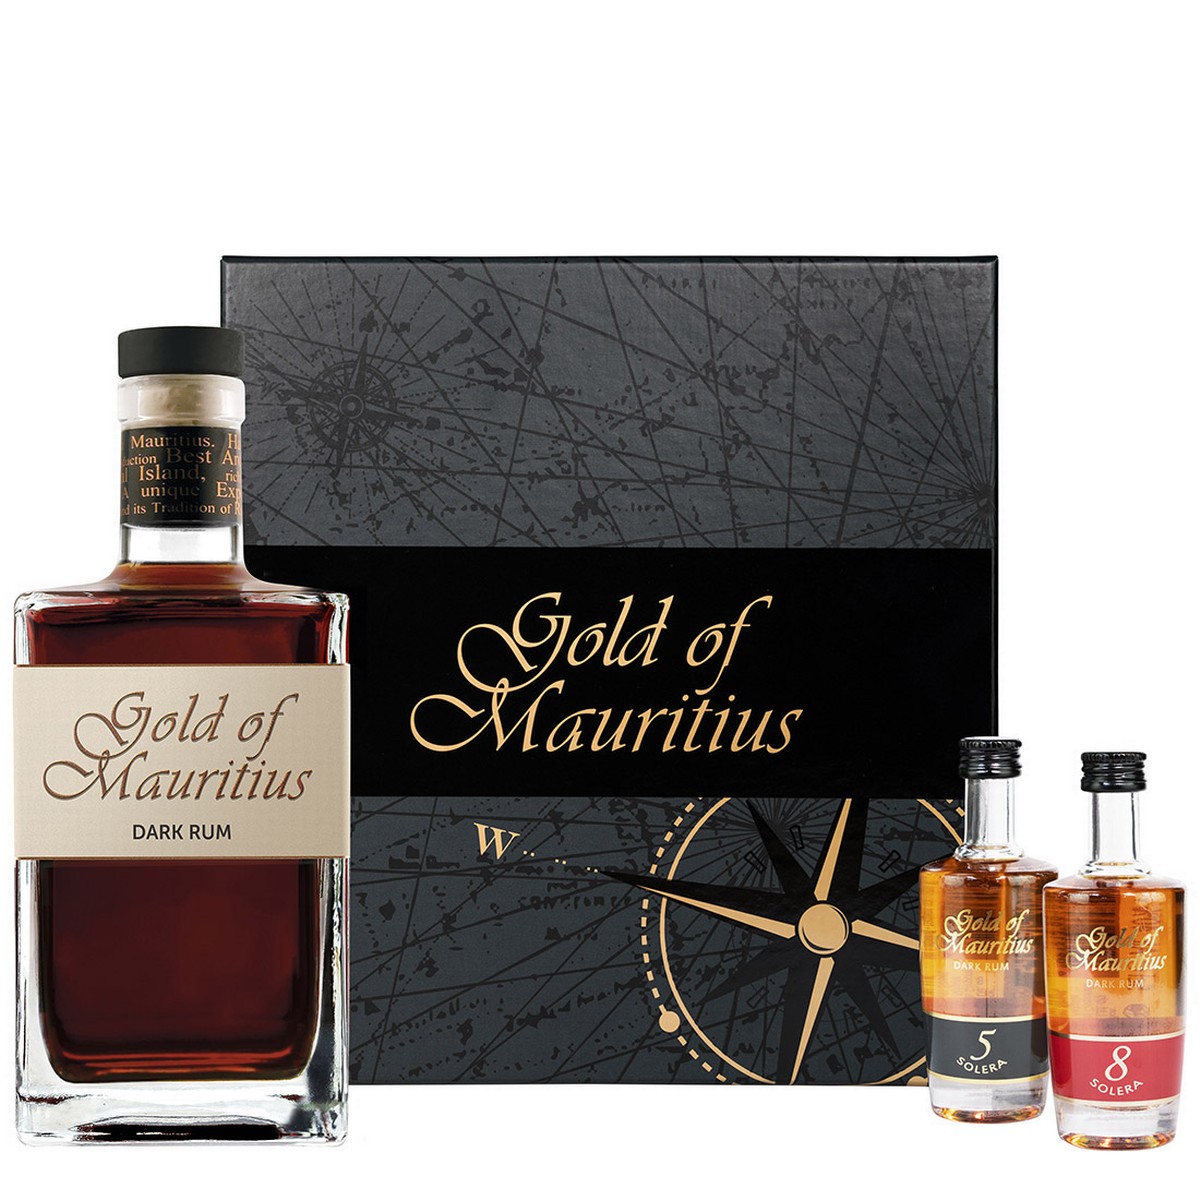 Gold of Mauritius Gift Box